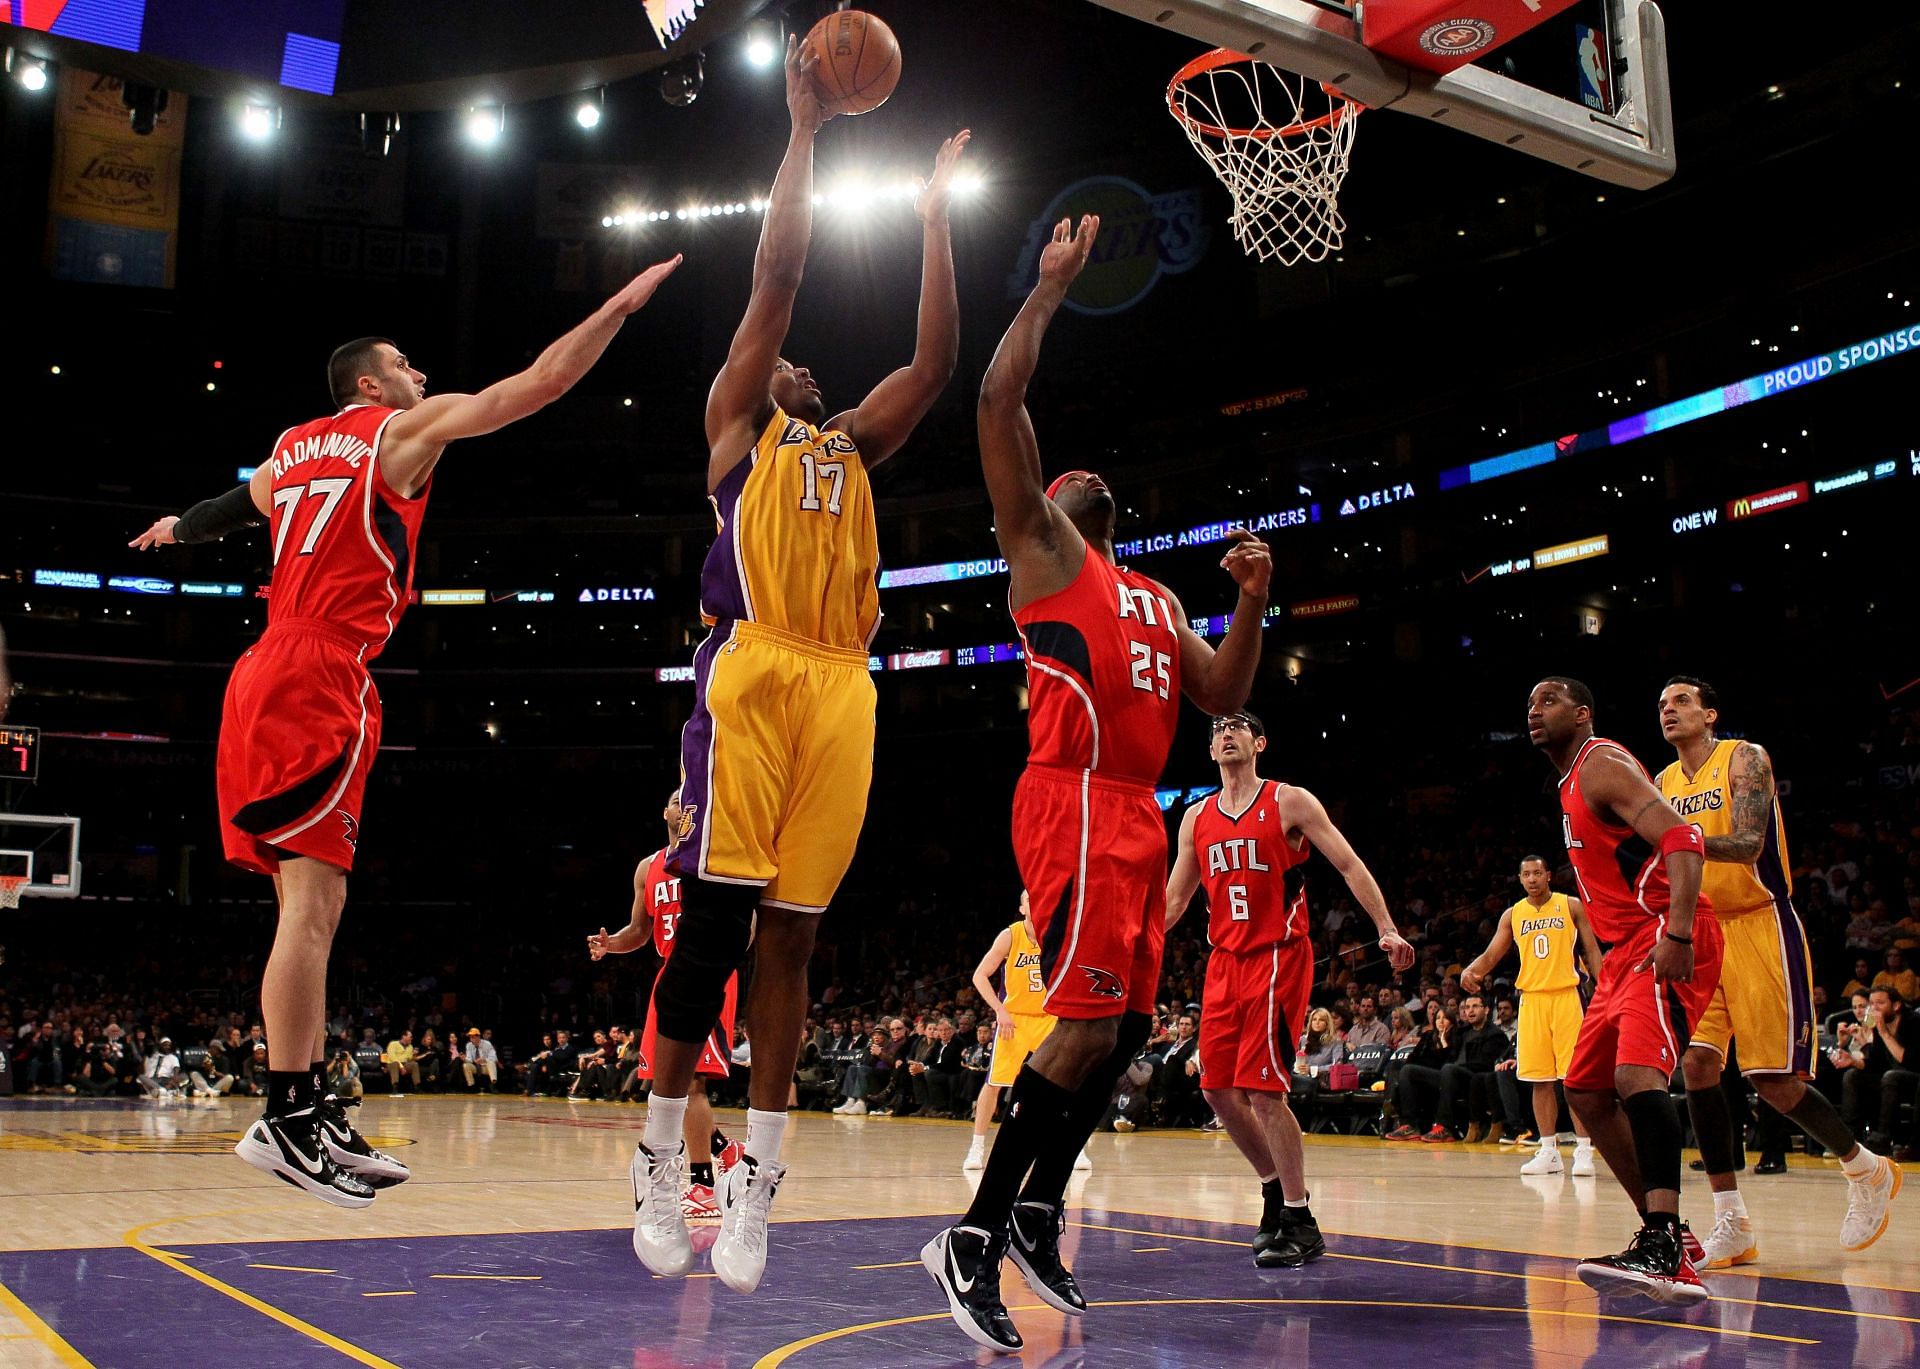 Vladimir Radmanovic attempts to block Andrew Bynum of the LA Lakers